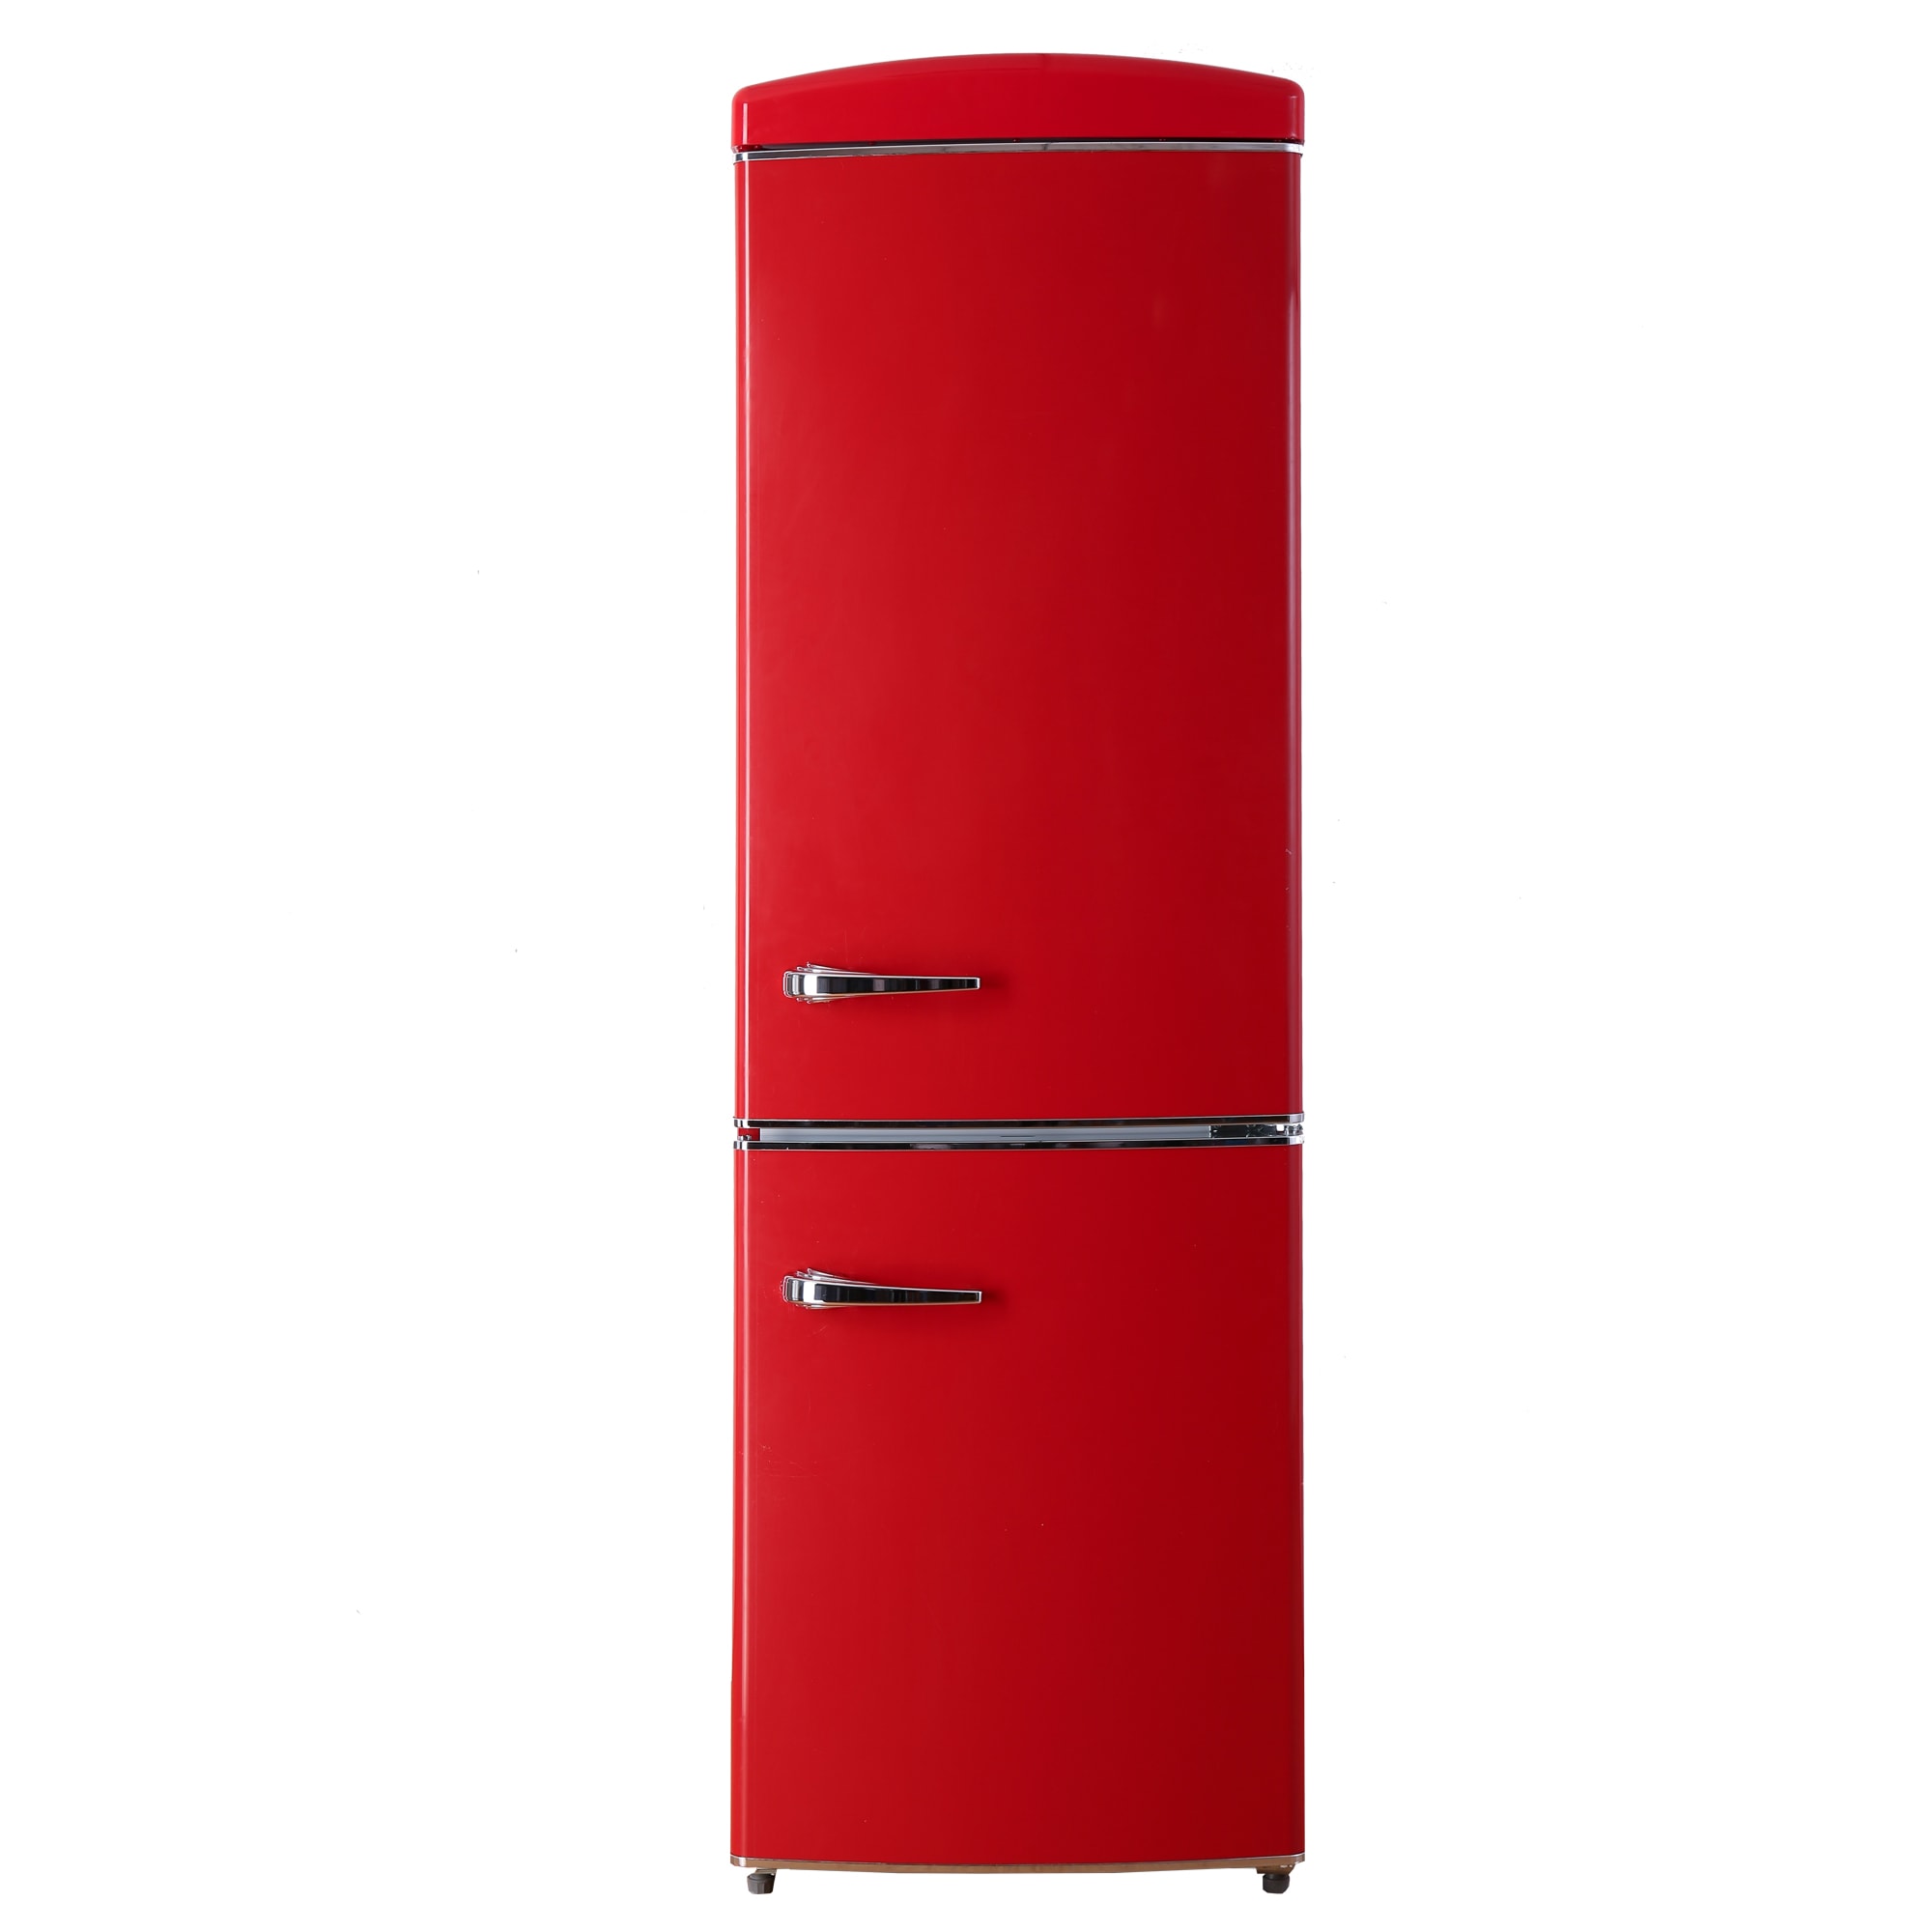 Adjustable Level Wheel Double Door Red Refrigerator BCD-138 from